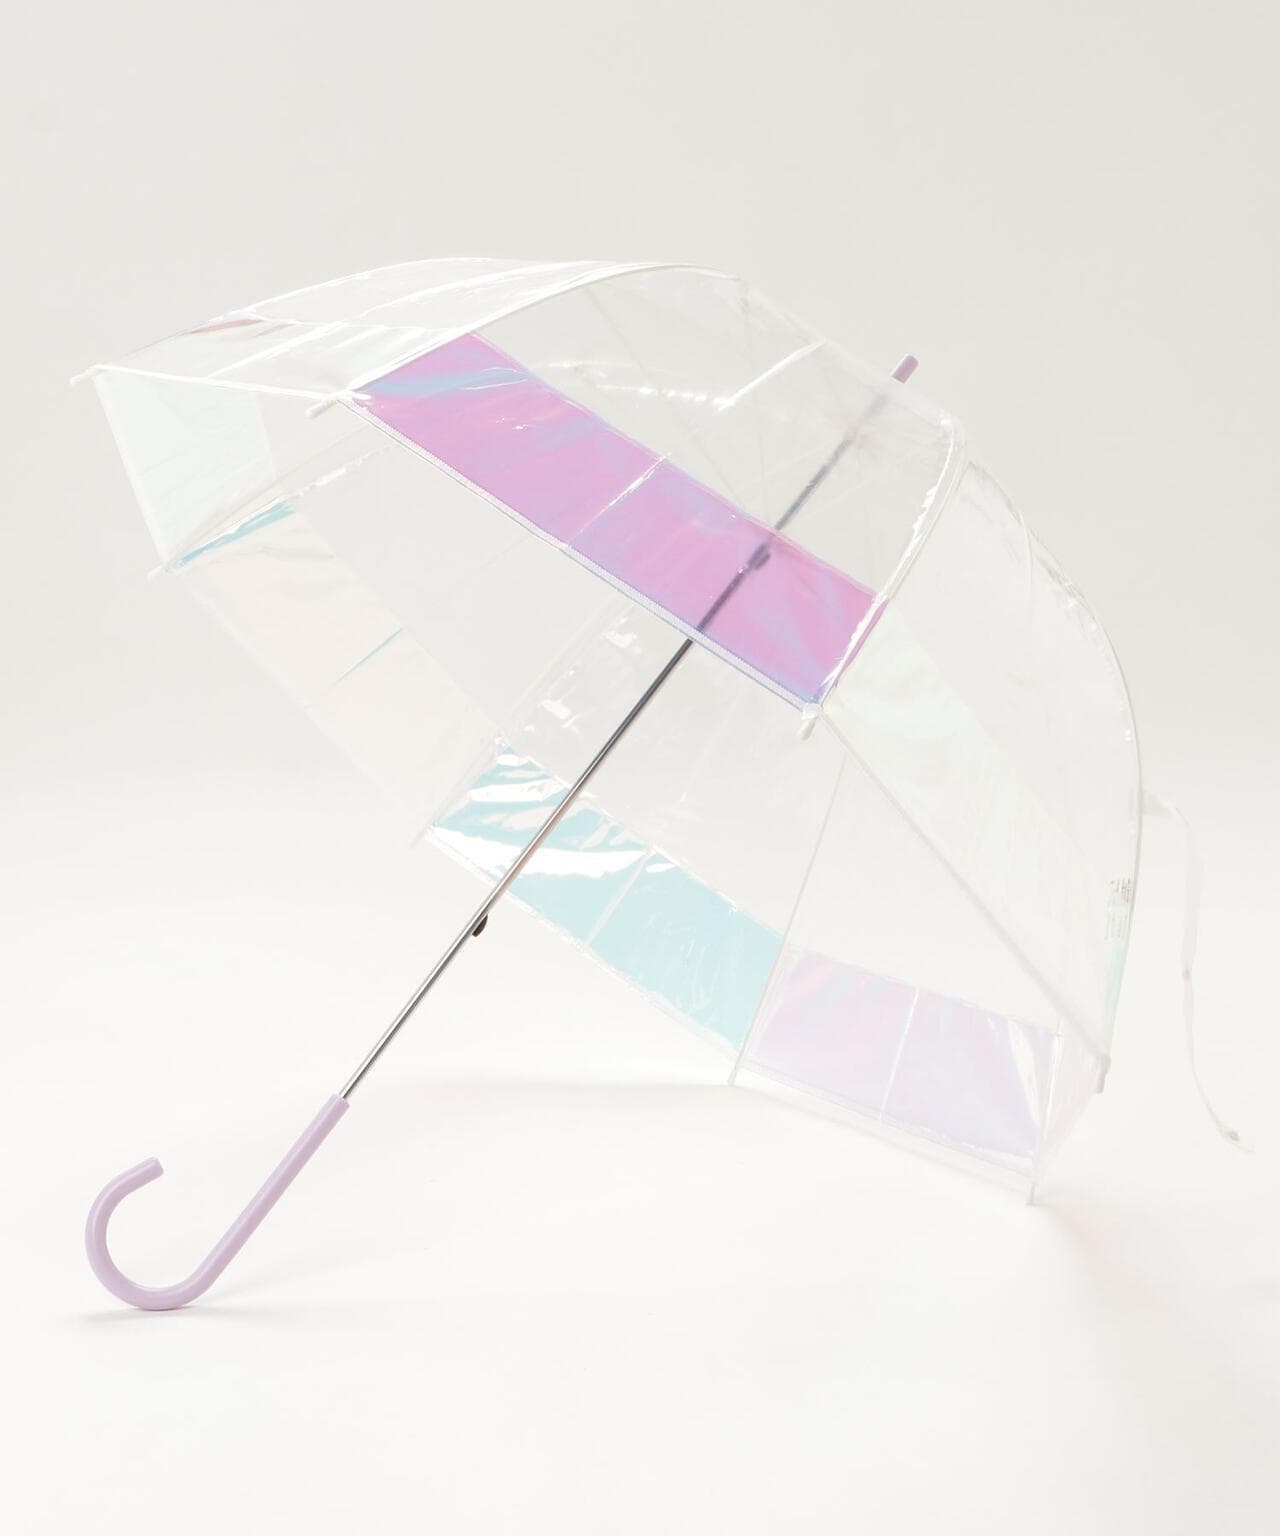 Wpc.（ダブリュー・ピー・シー）雨傘 ビニール傘 ドームシャイニー 